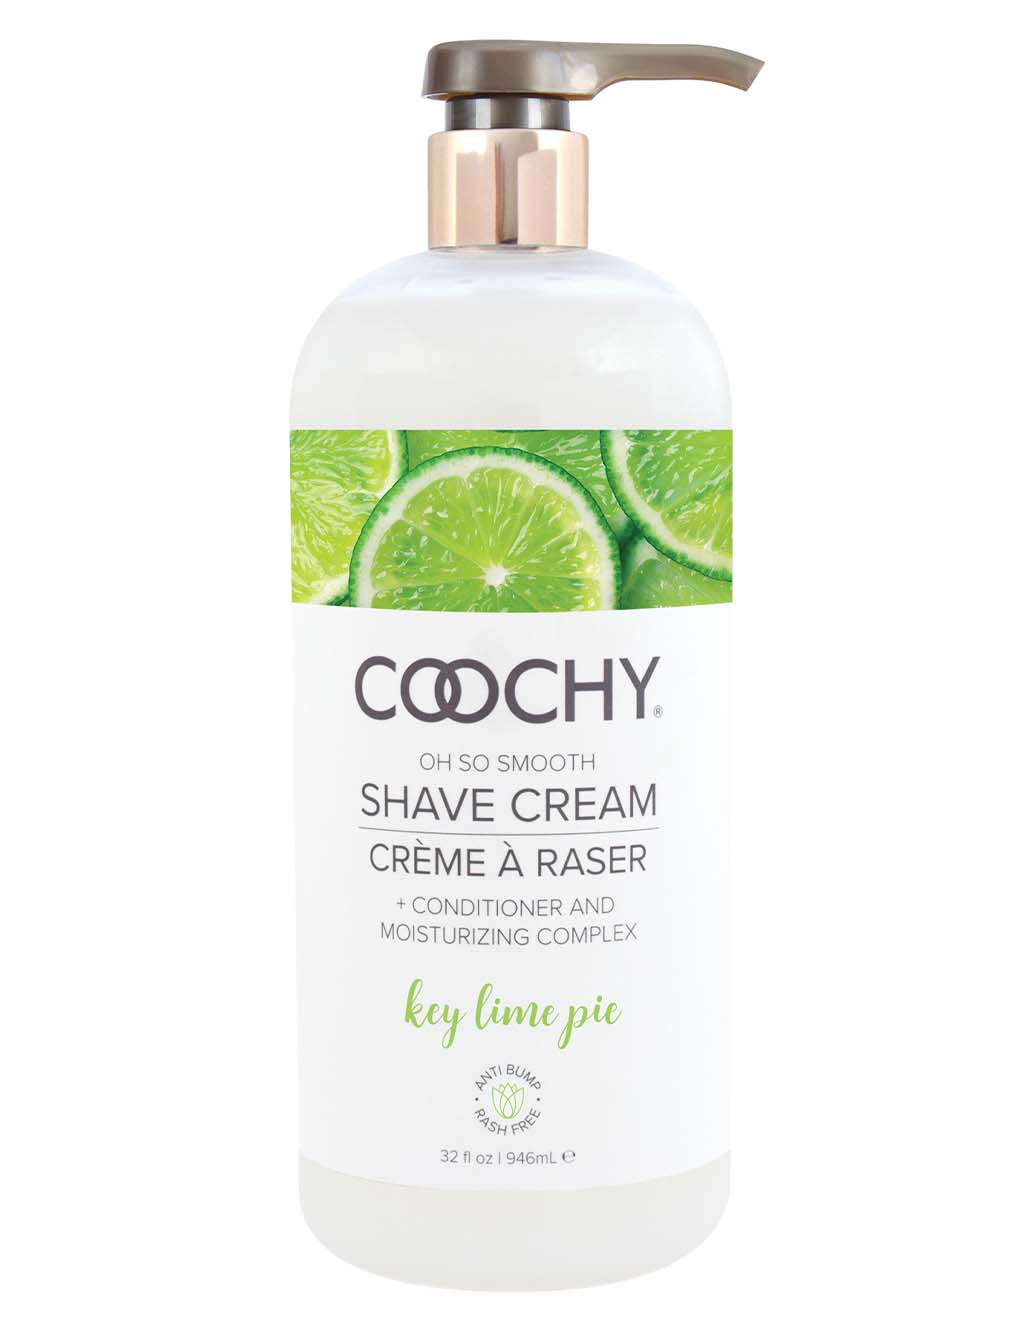 Coochy Shave Cream Key Lime Pie- 32 oz